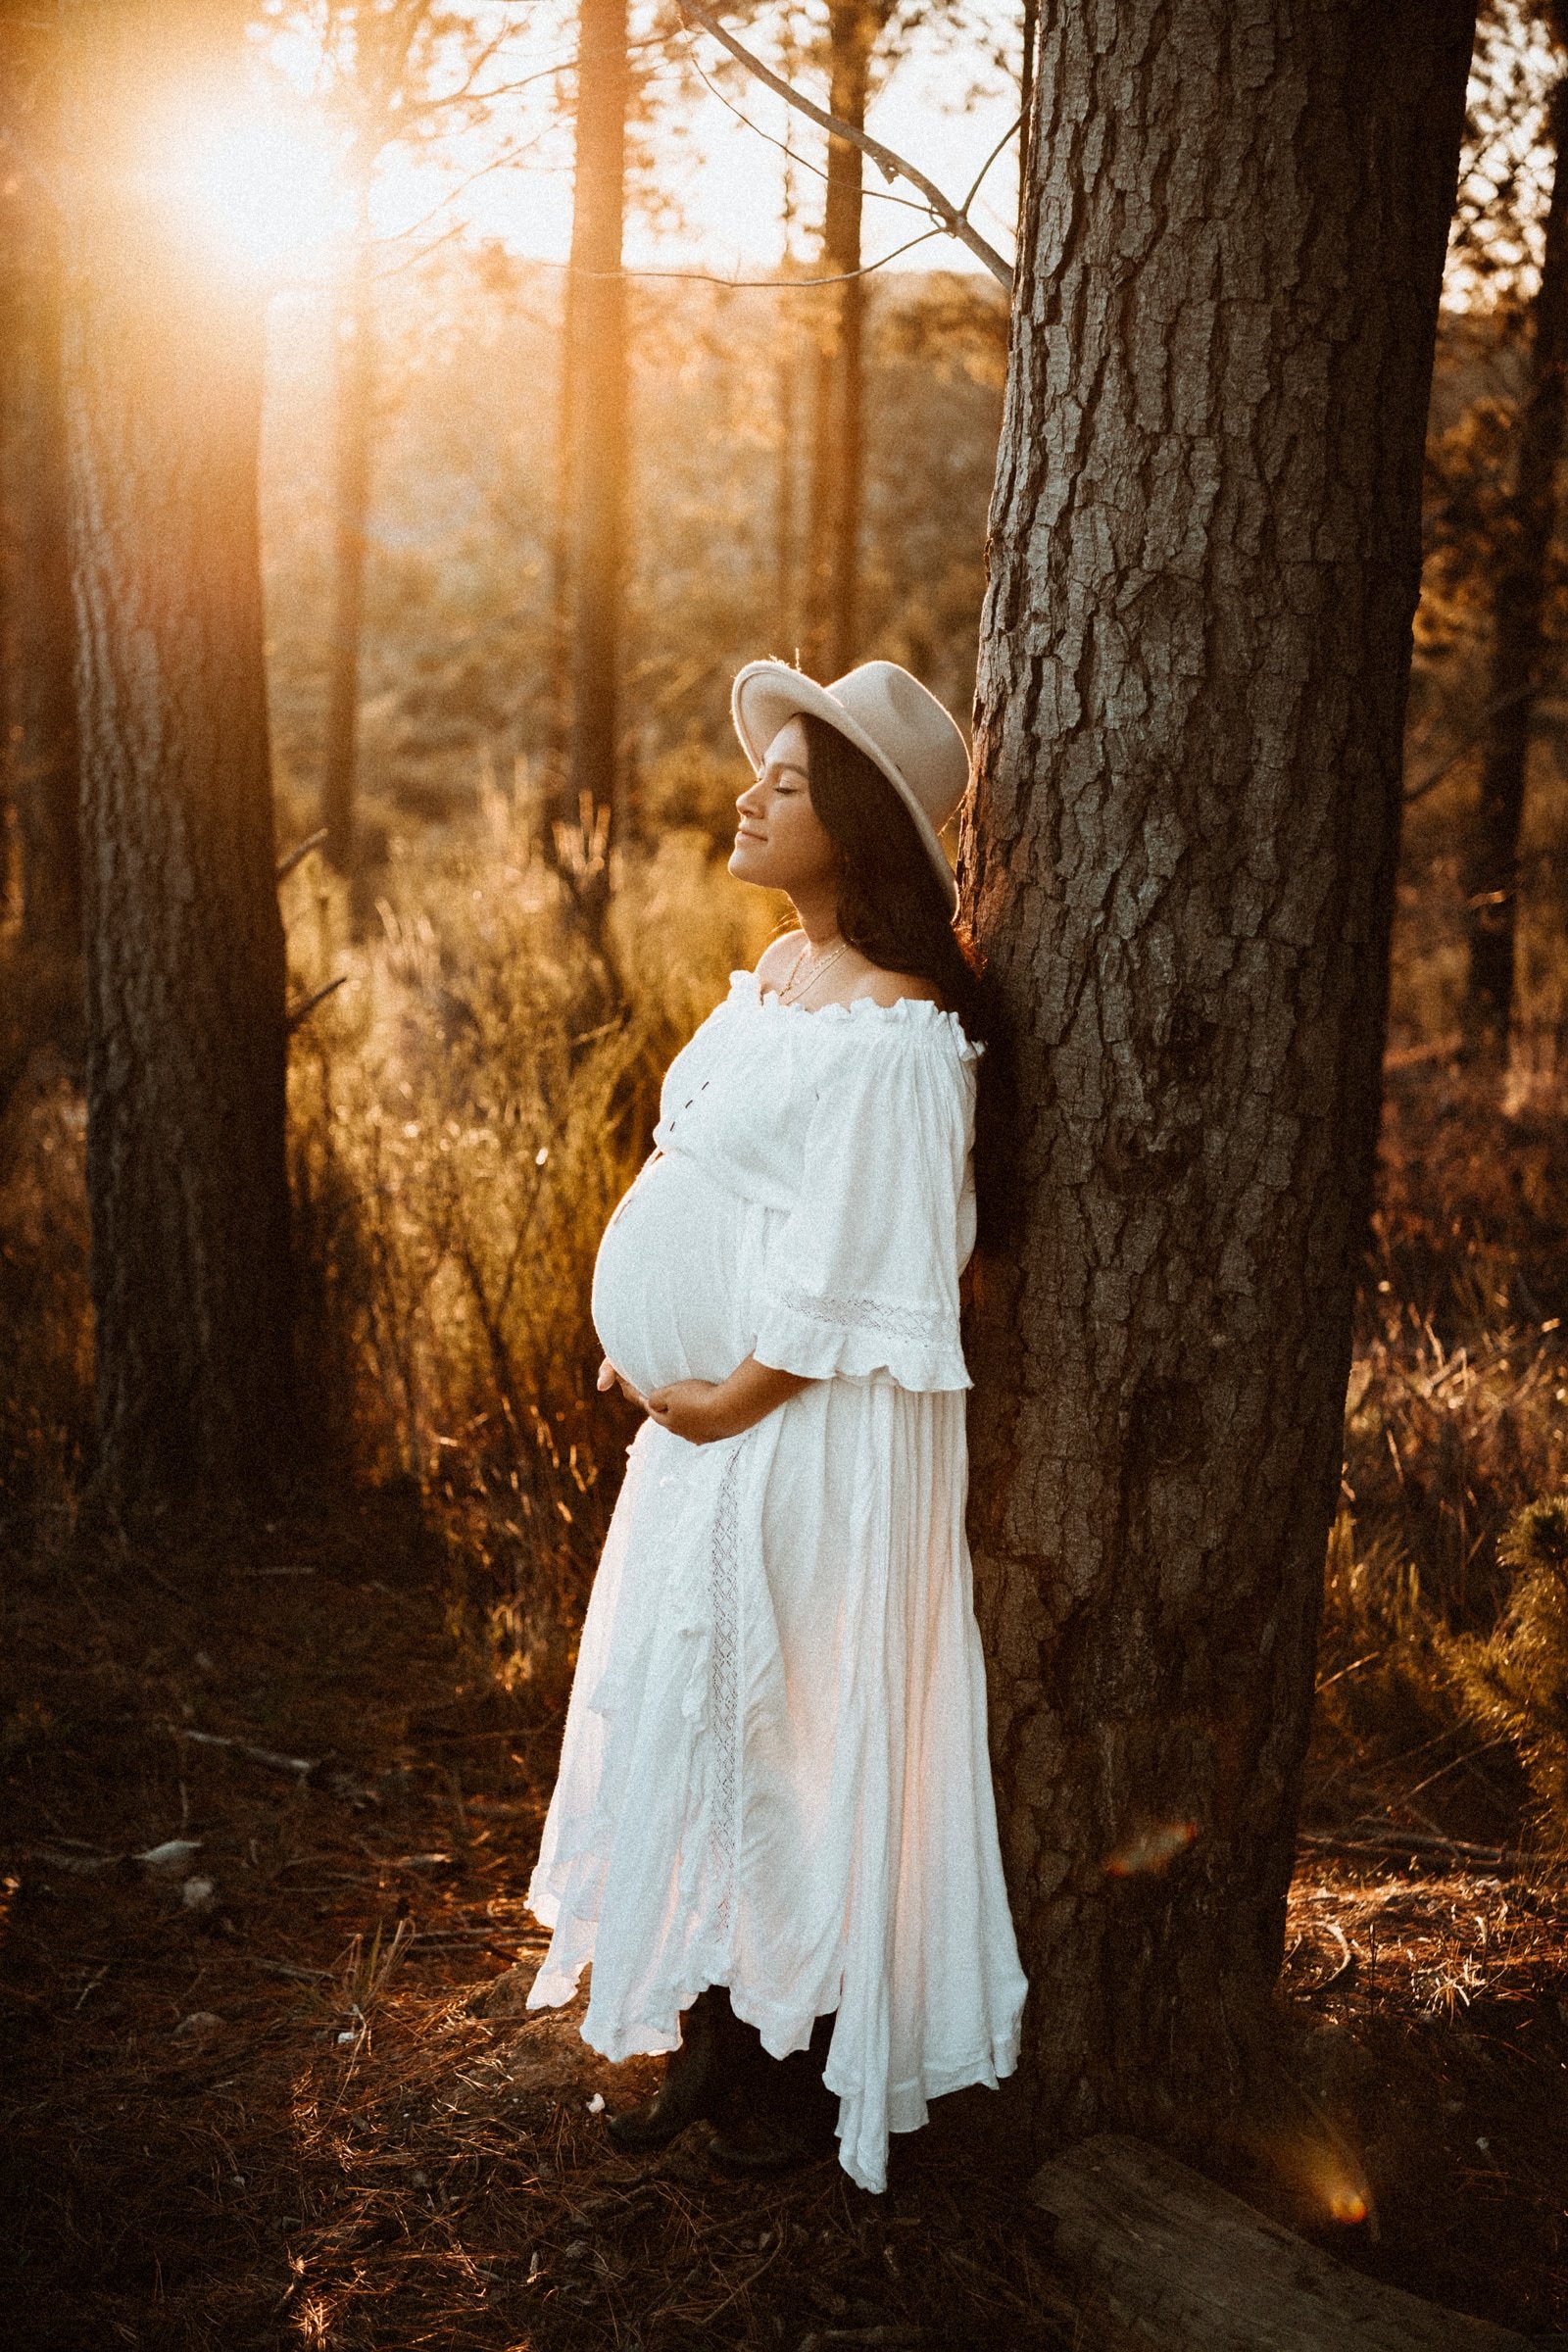 Melbourne maternity photographer | Emma Pender Photography